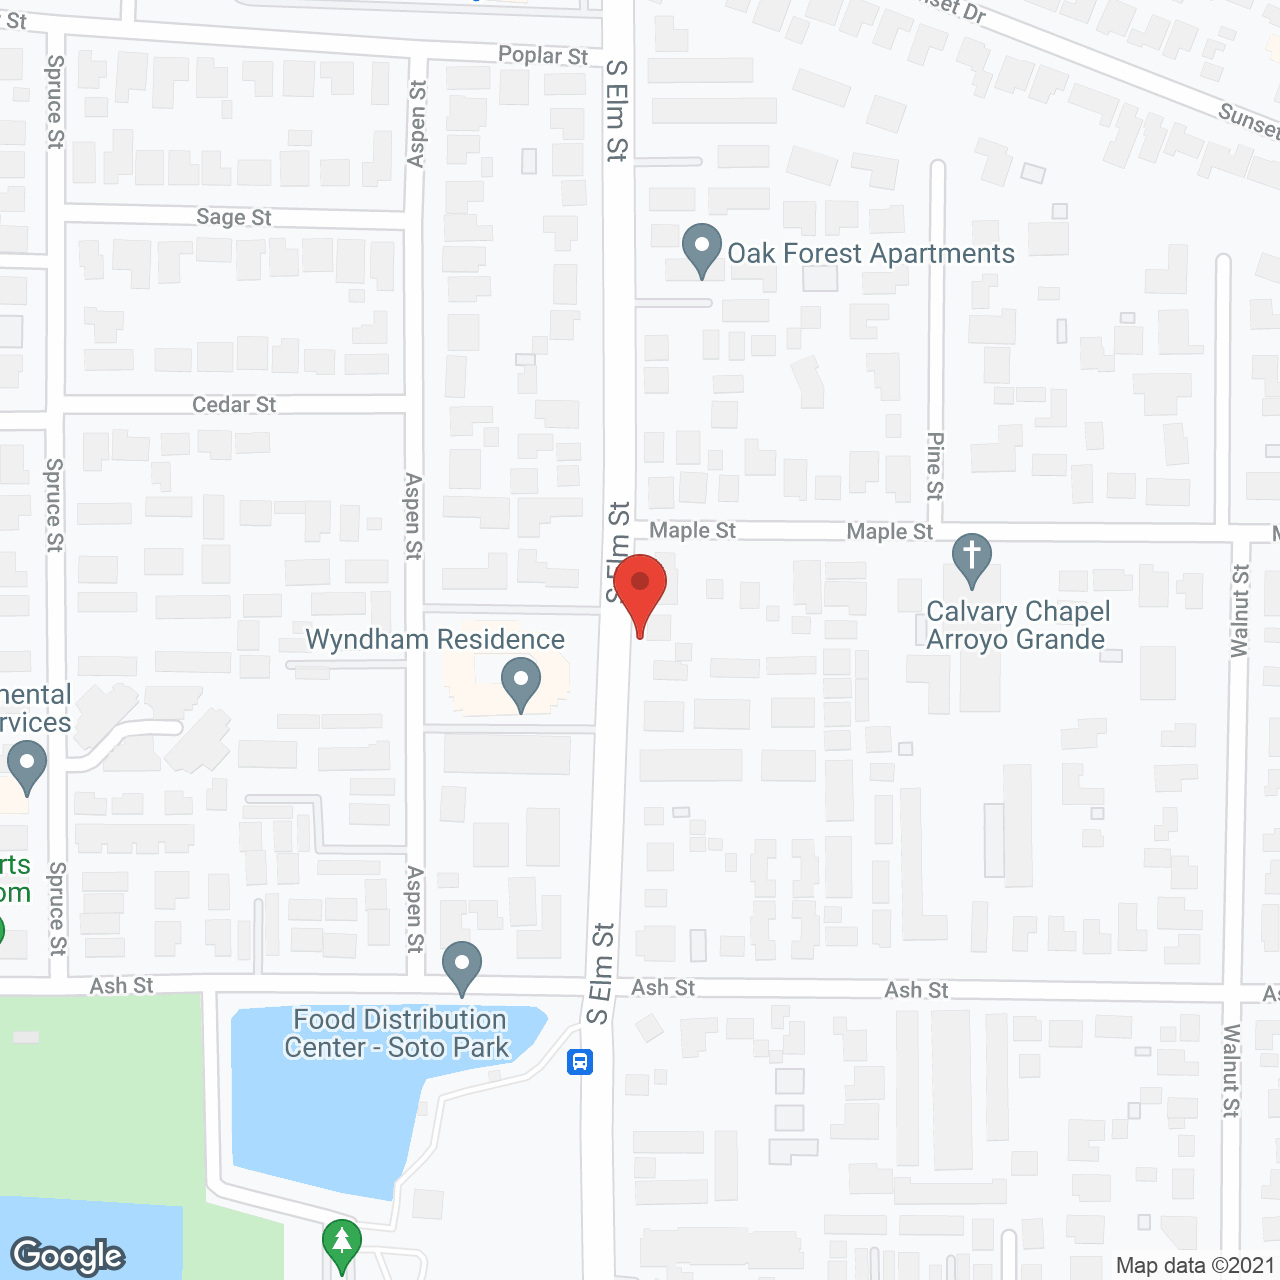 Wyndham Residence in google map